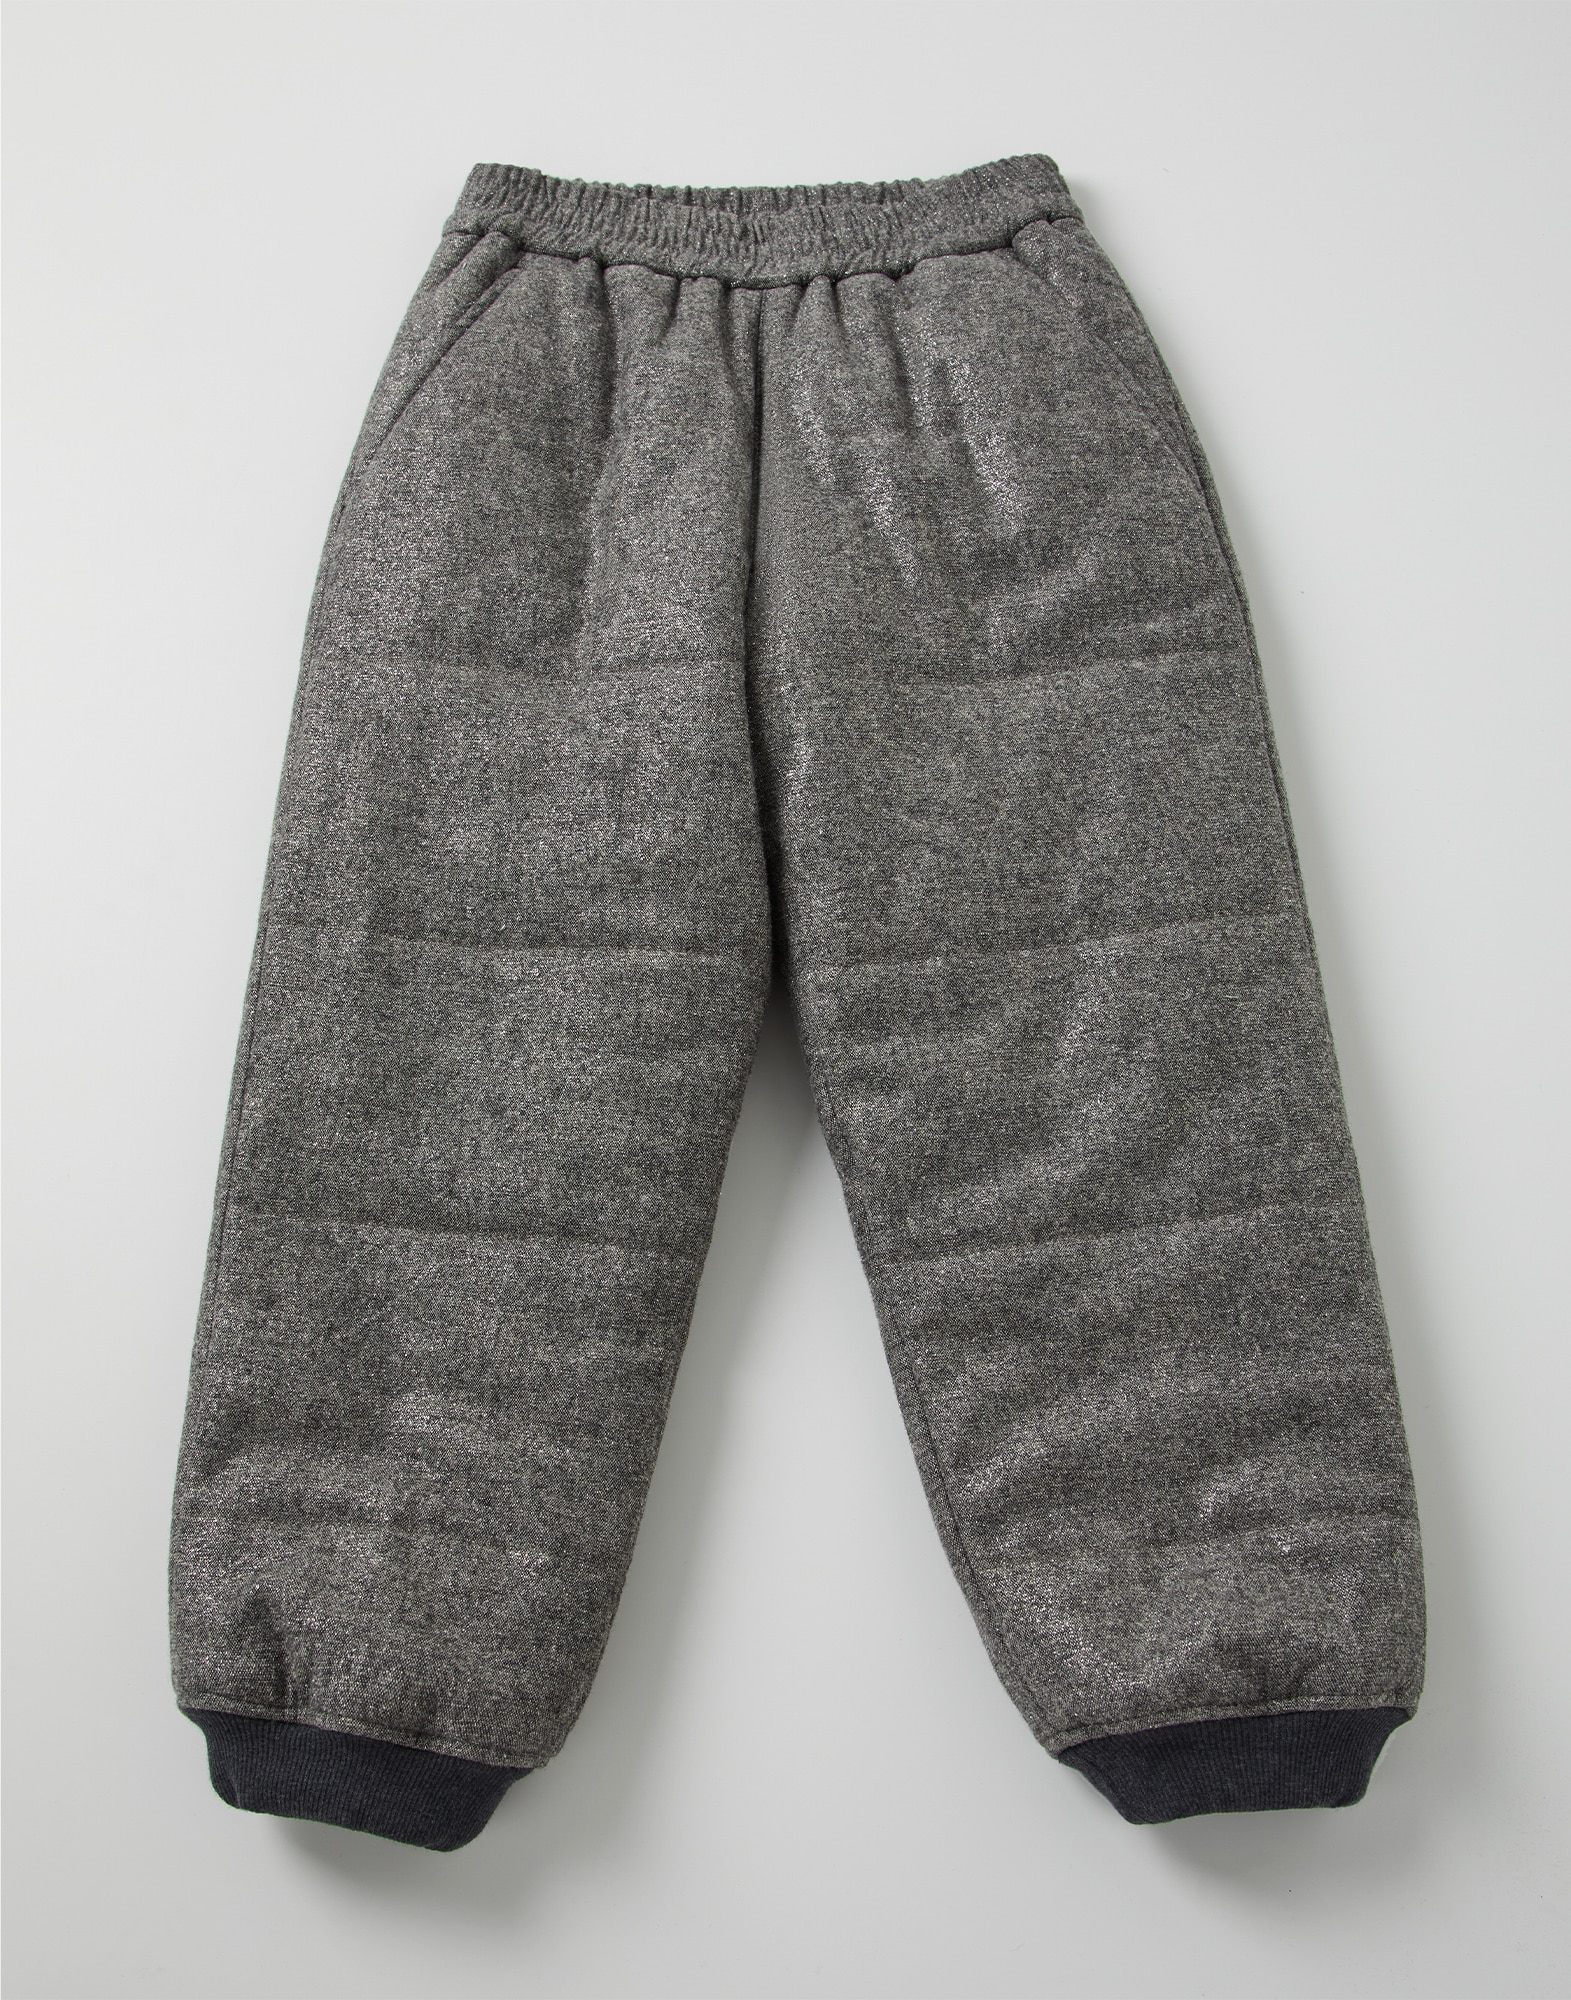 Wool trousers